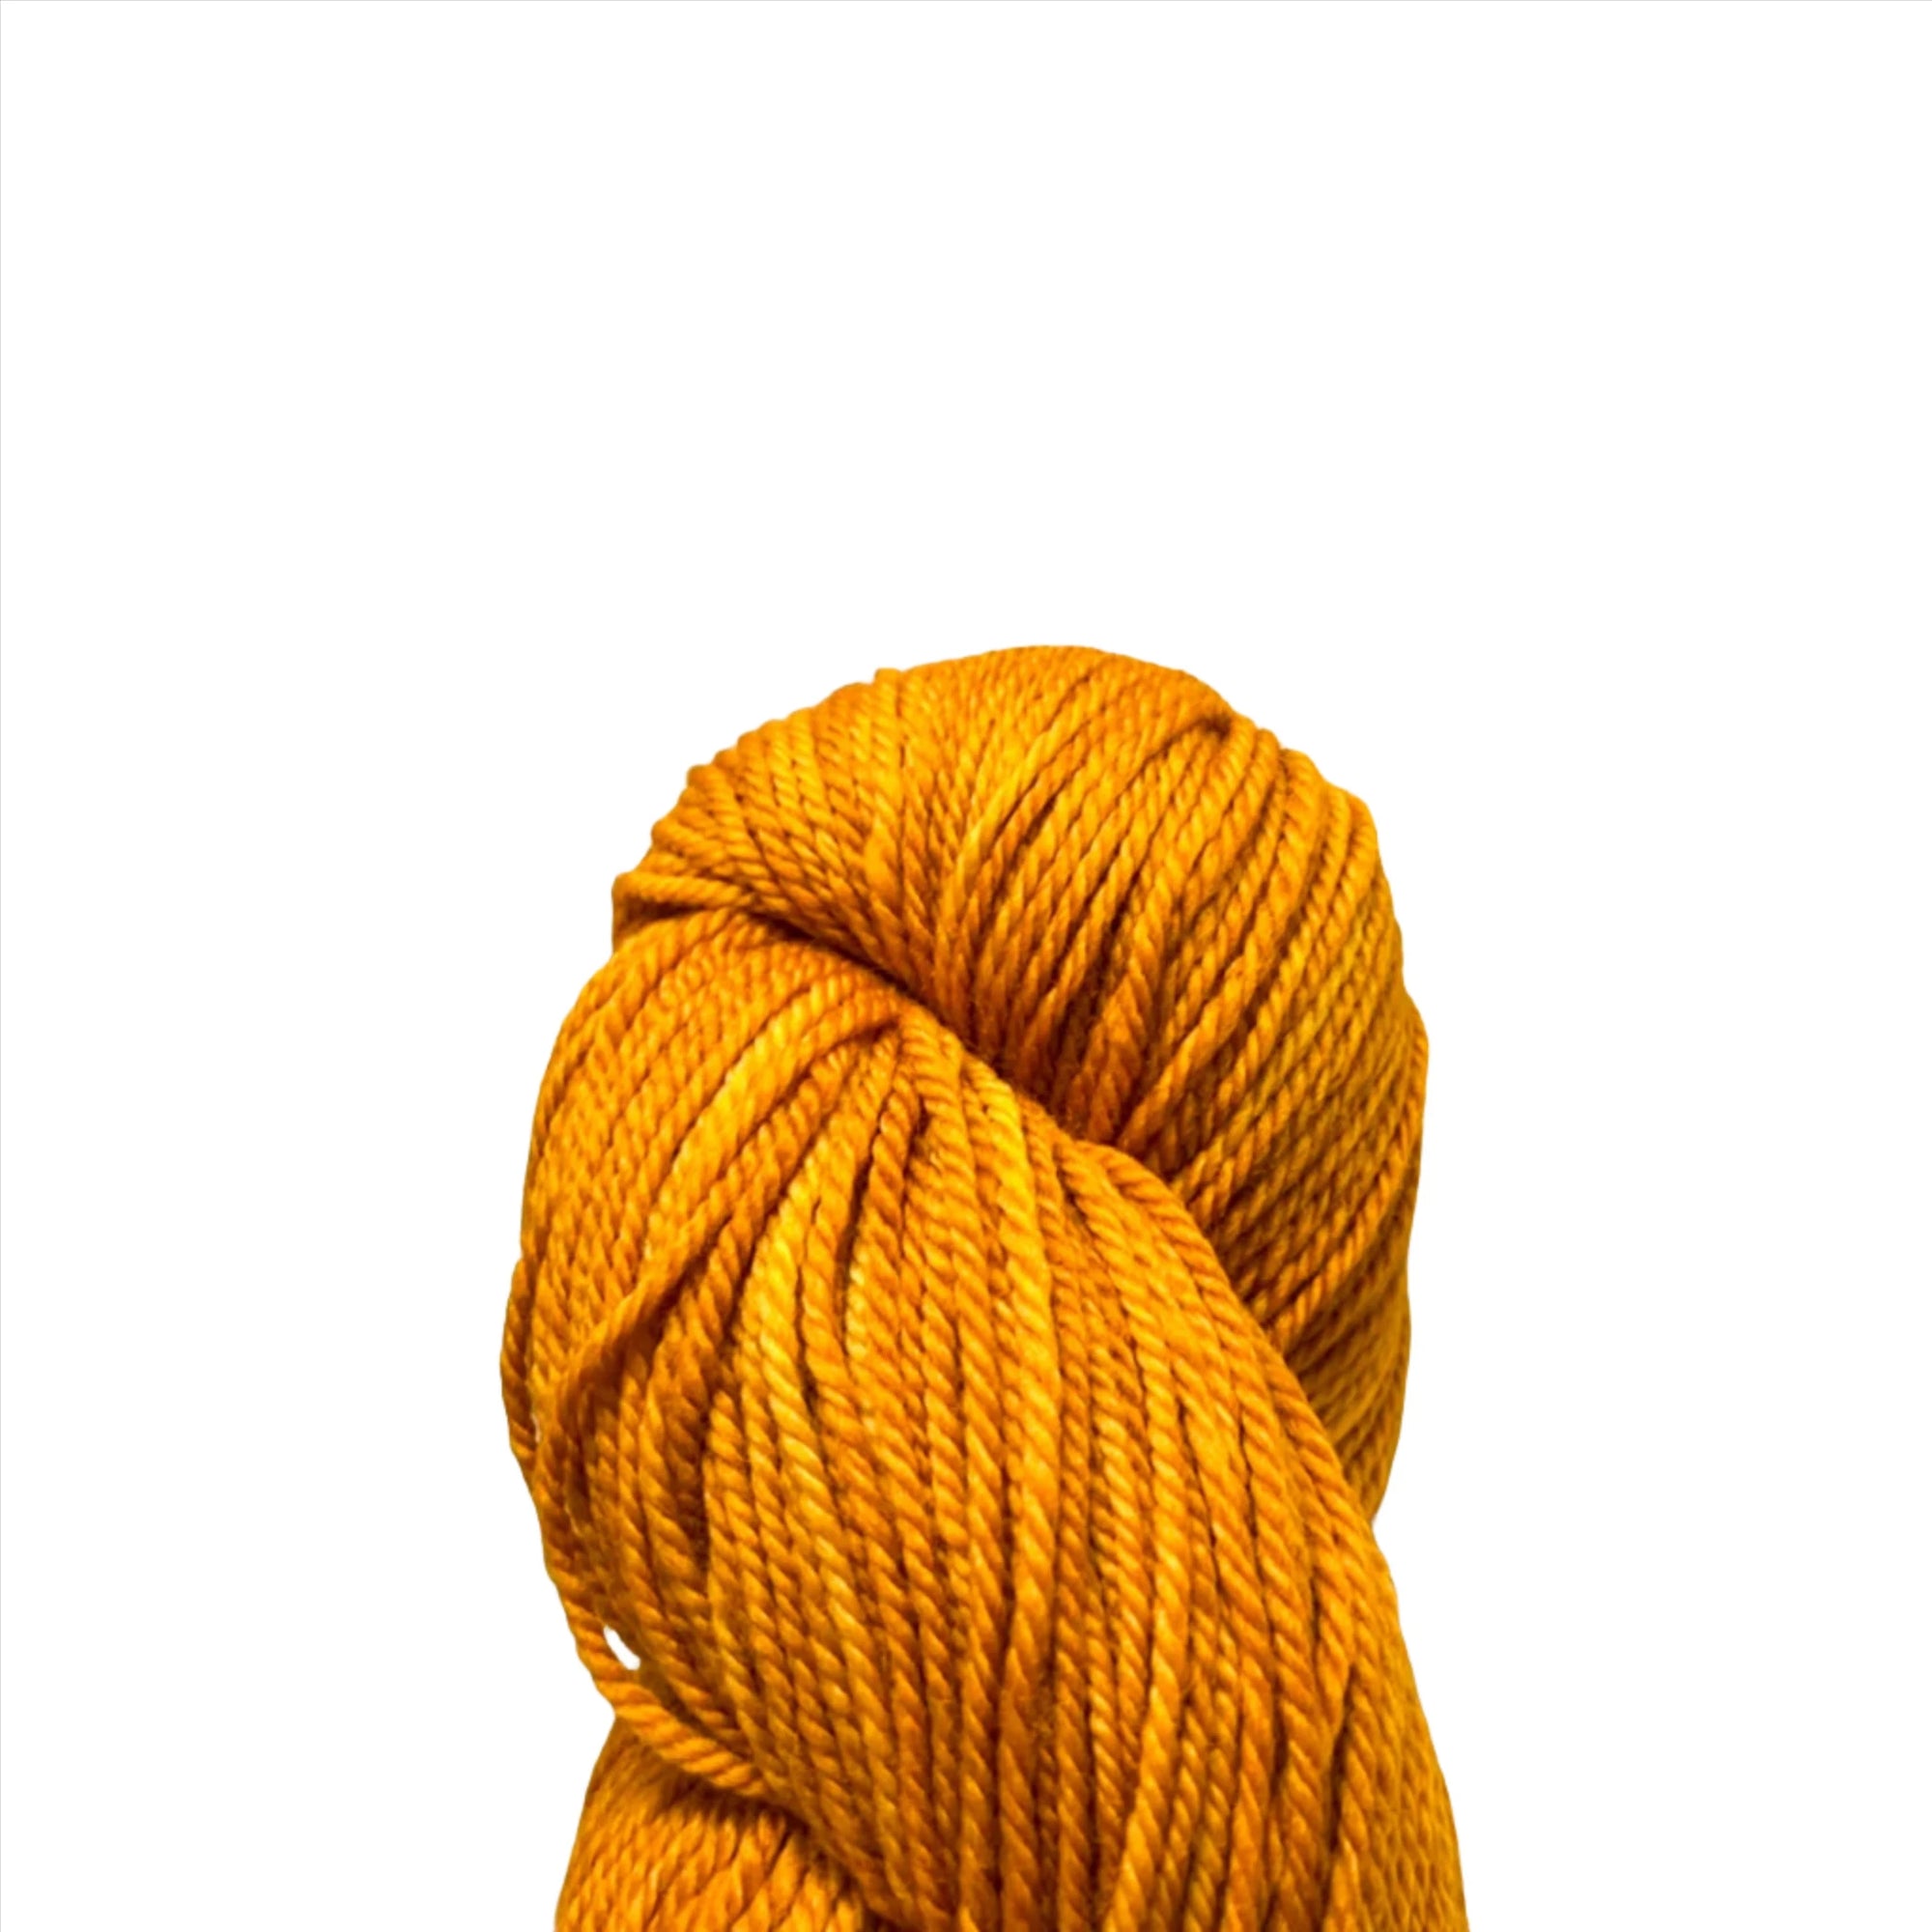 Koigu Jasmine - Koigu - J1209-0001 - The Little Yarn Store